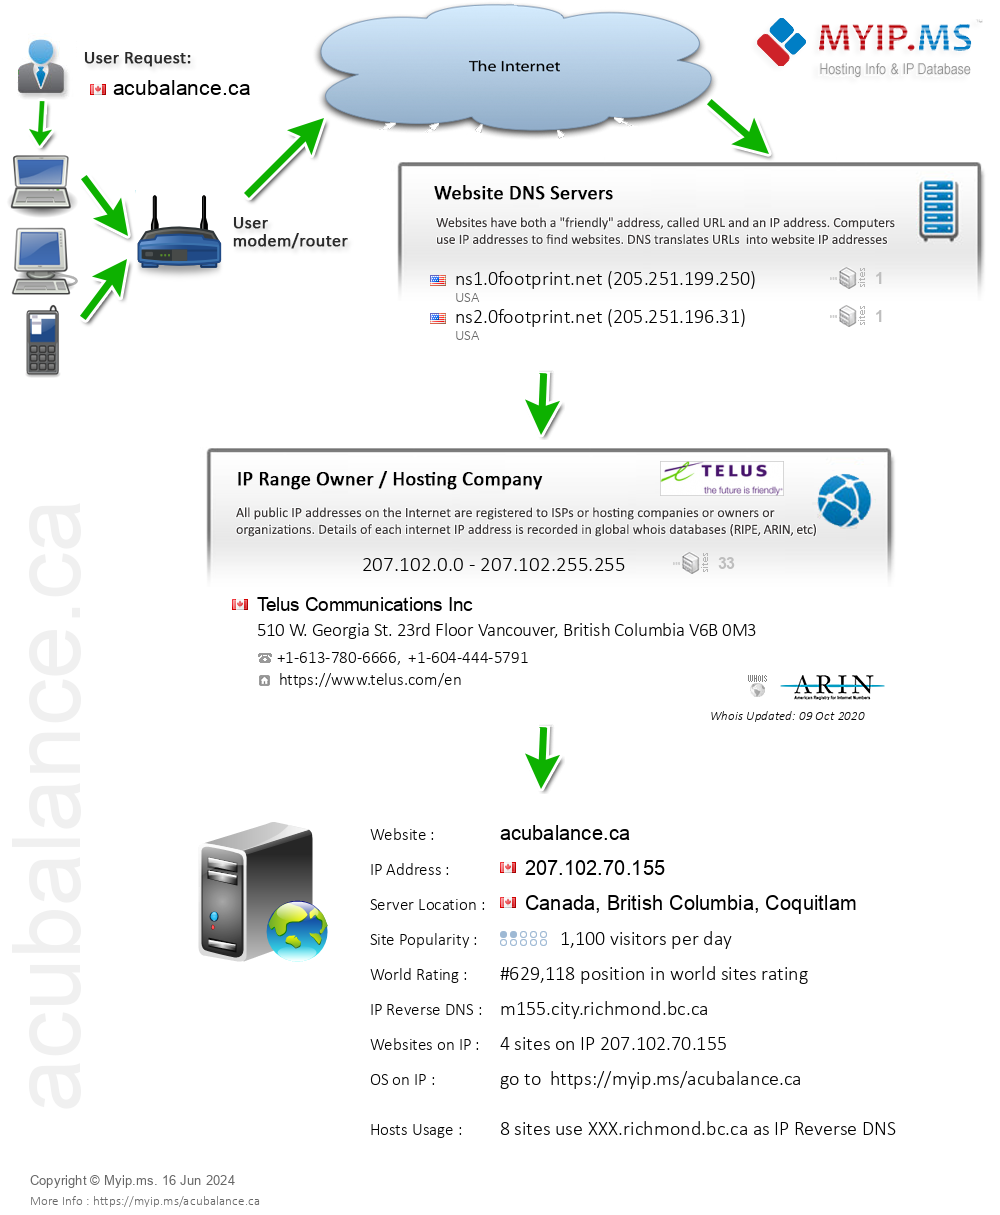 Acubalance.ca - Website Hosting Visual IP Diagram